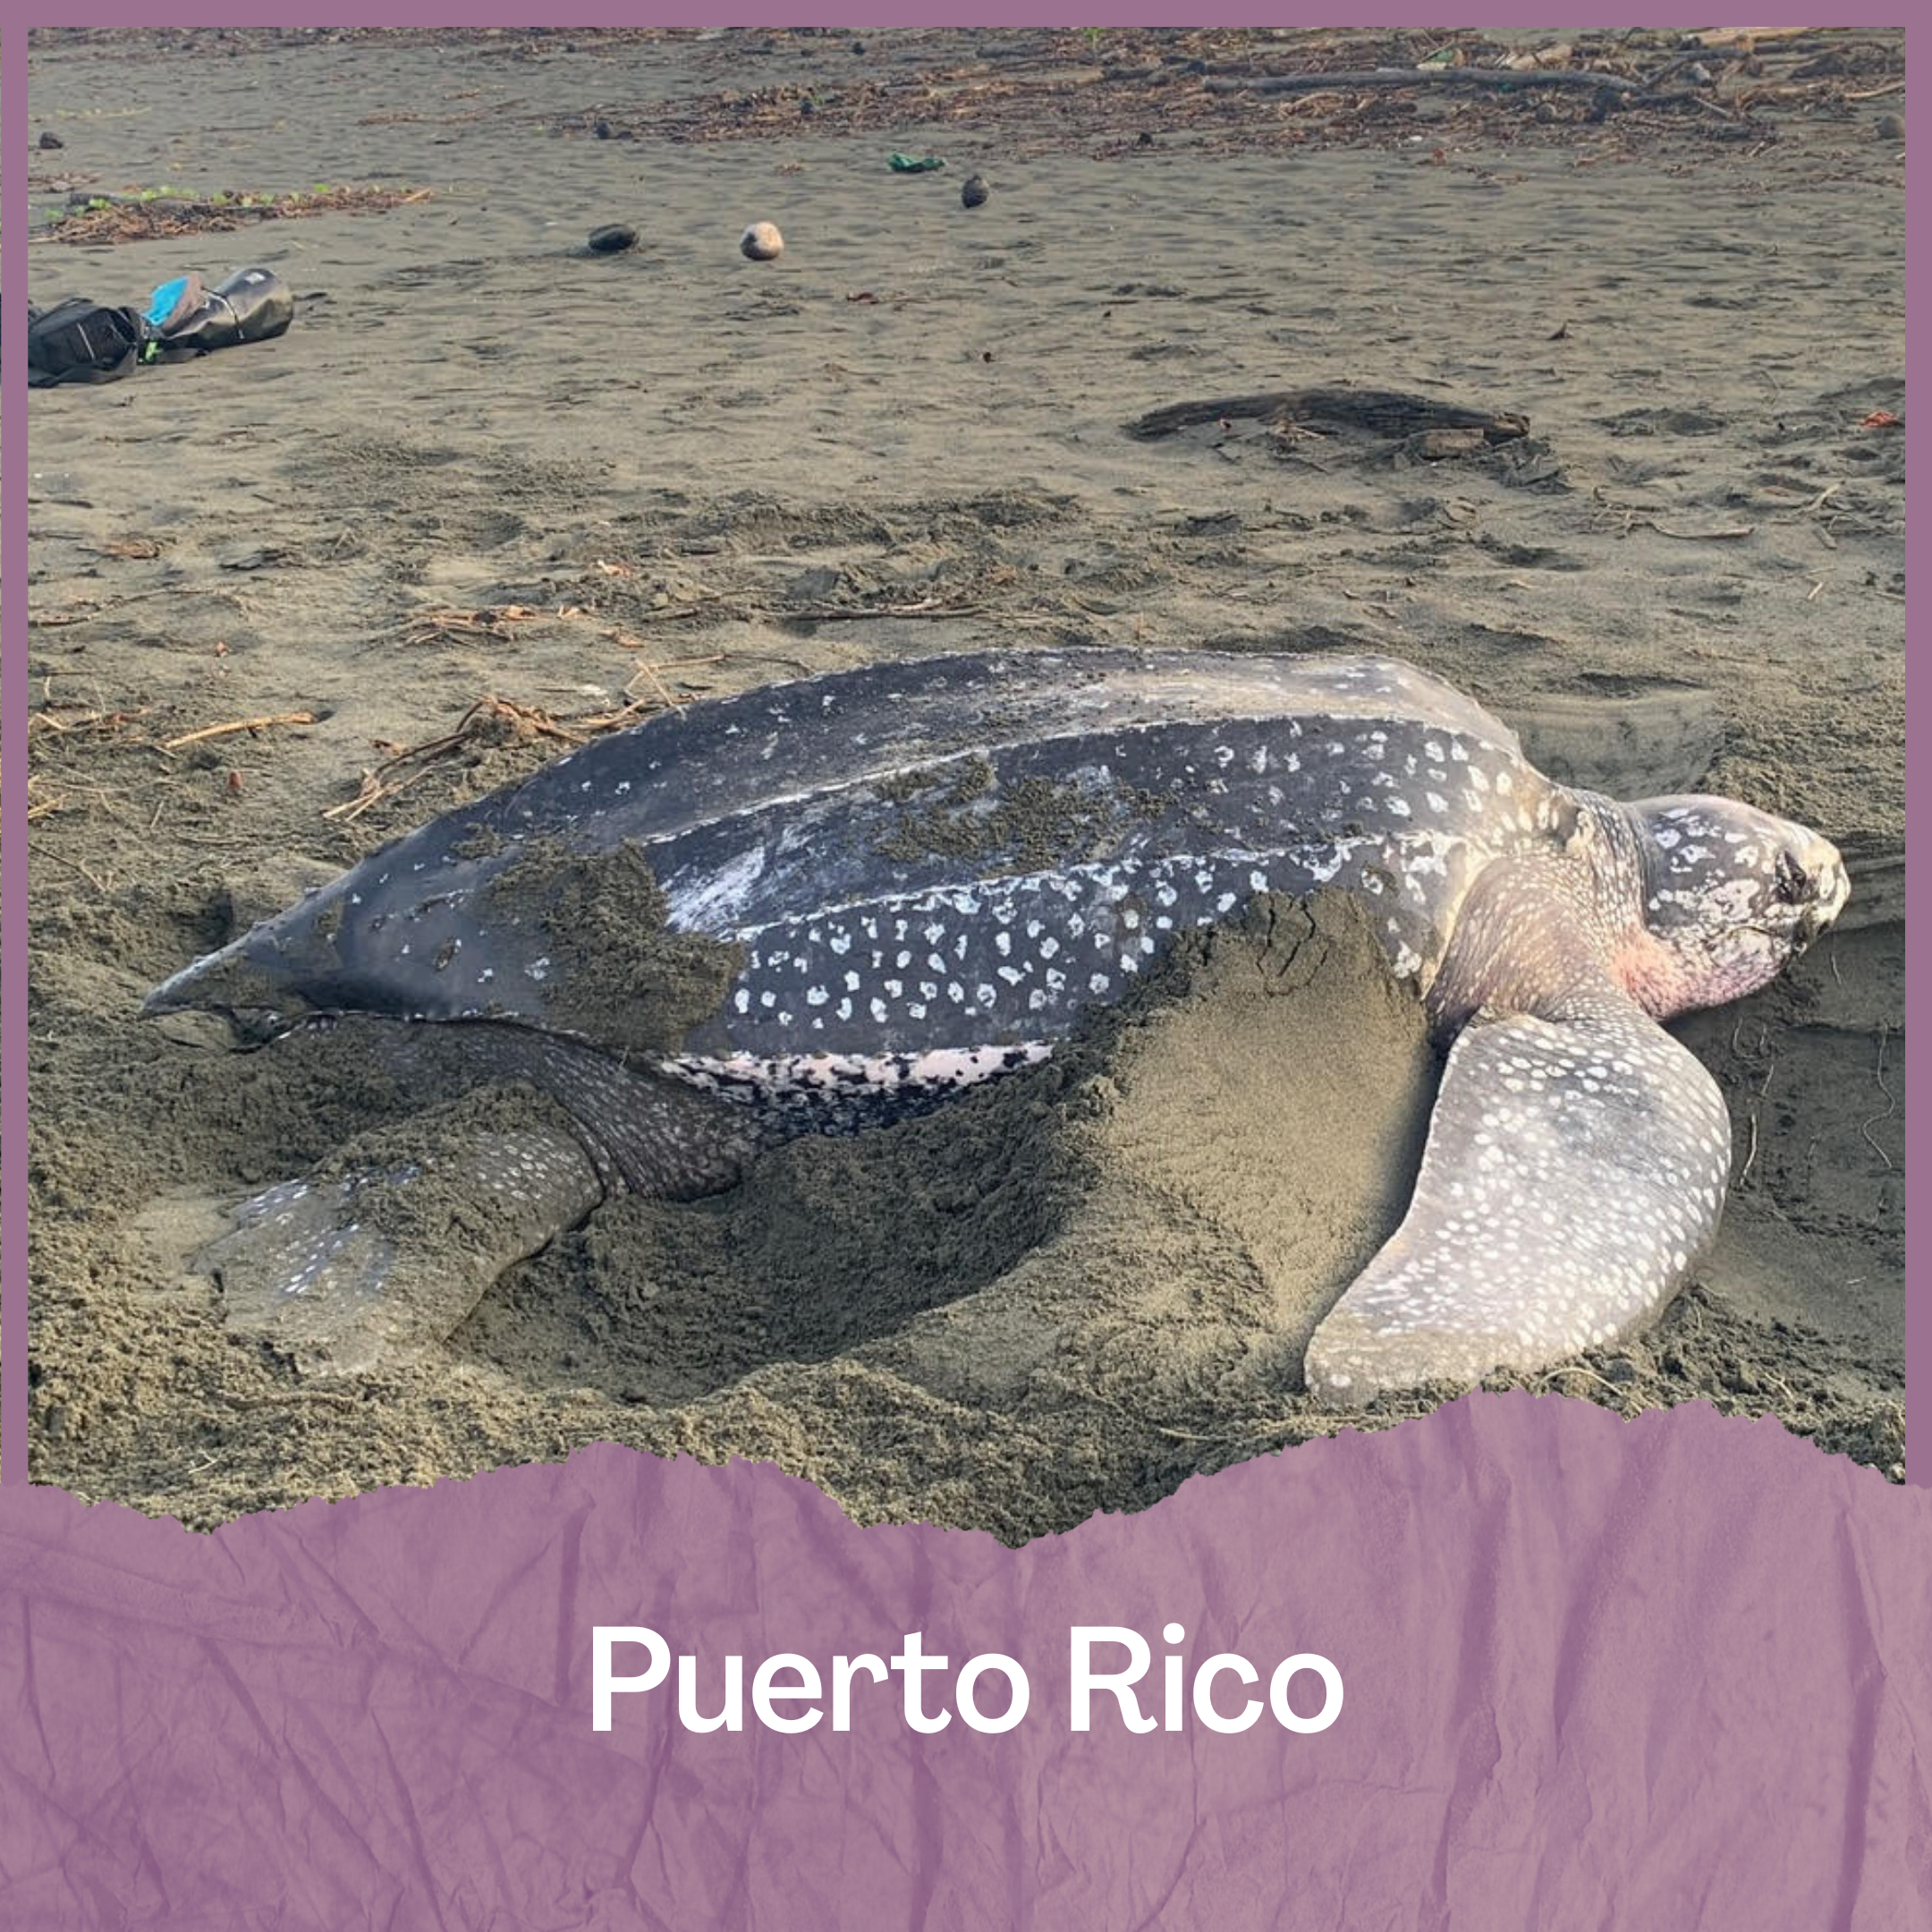 Puerto Rico Turtle Adventure